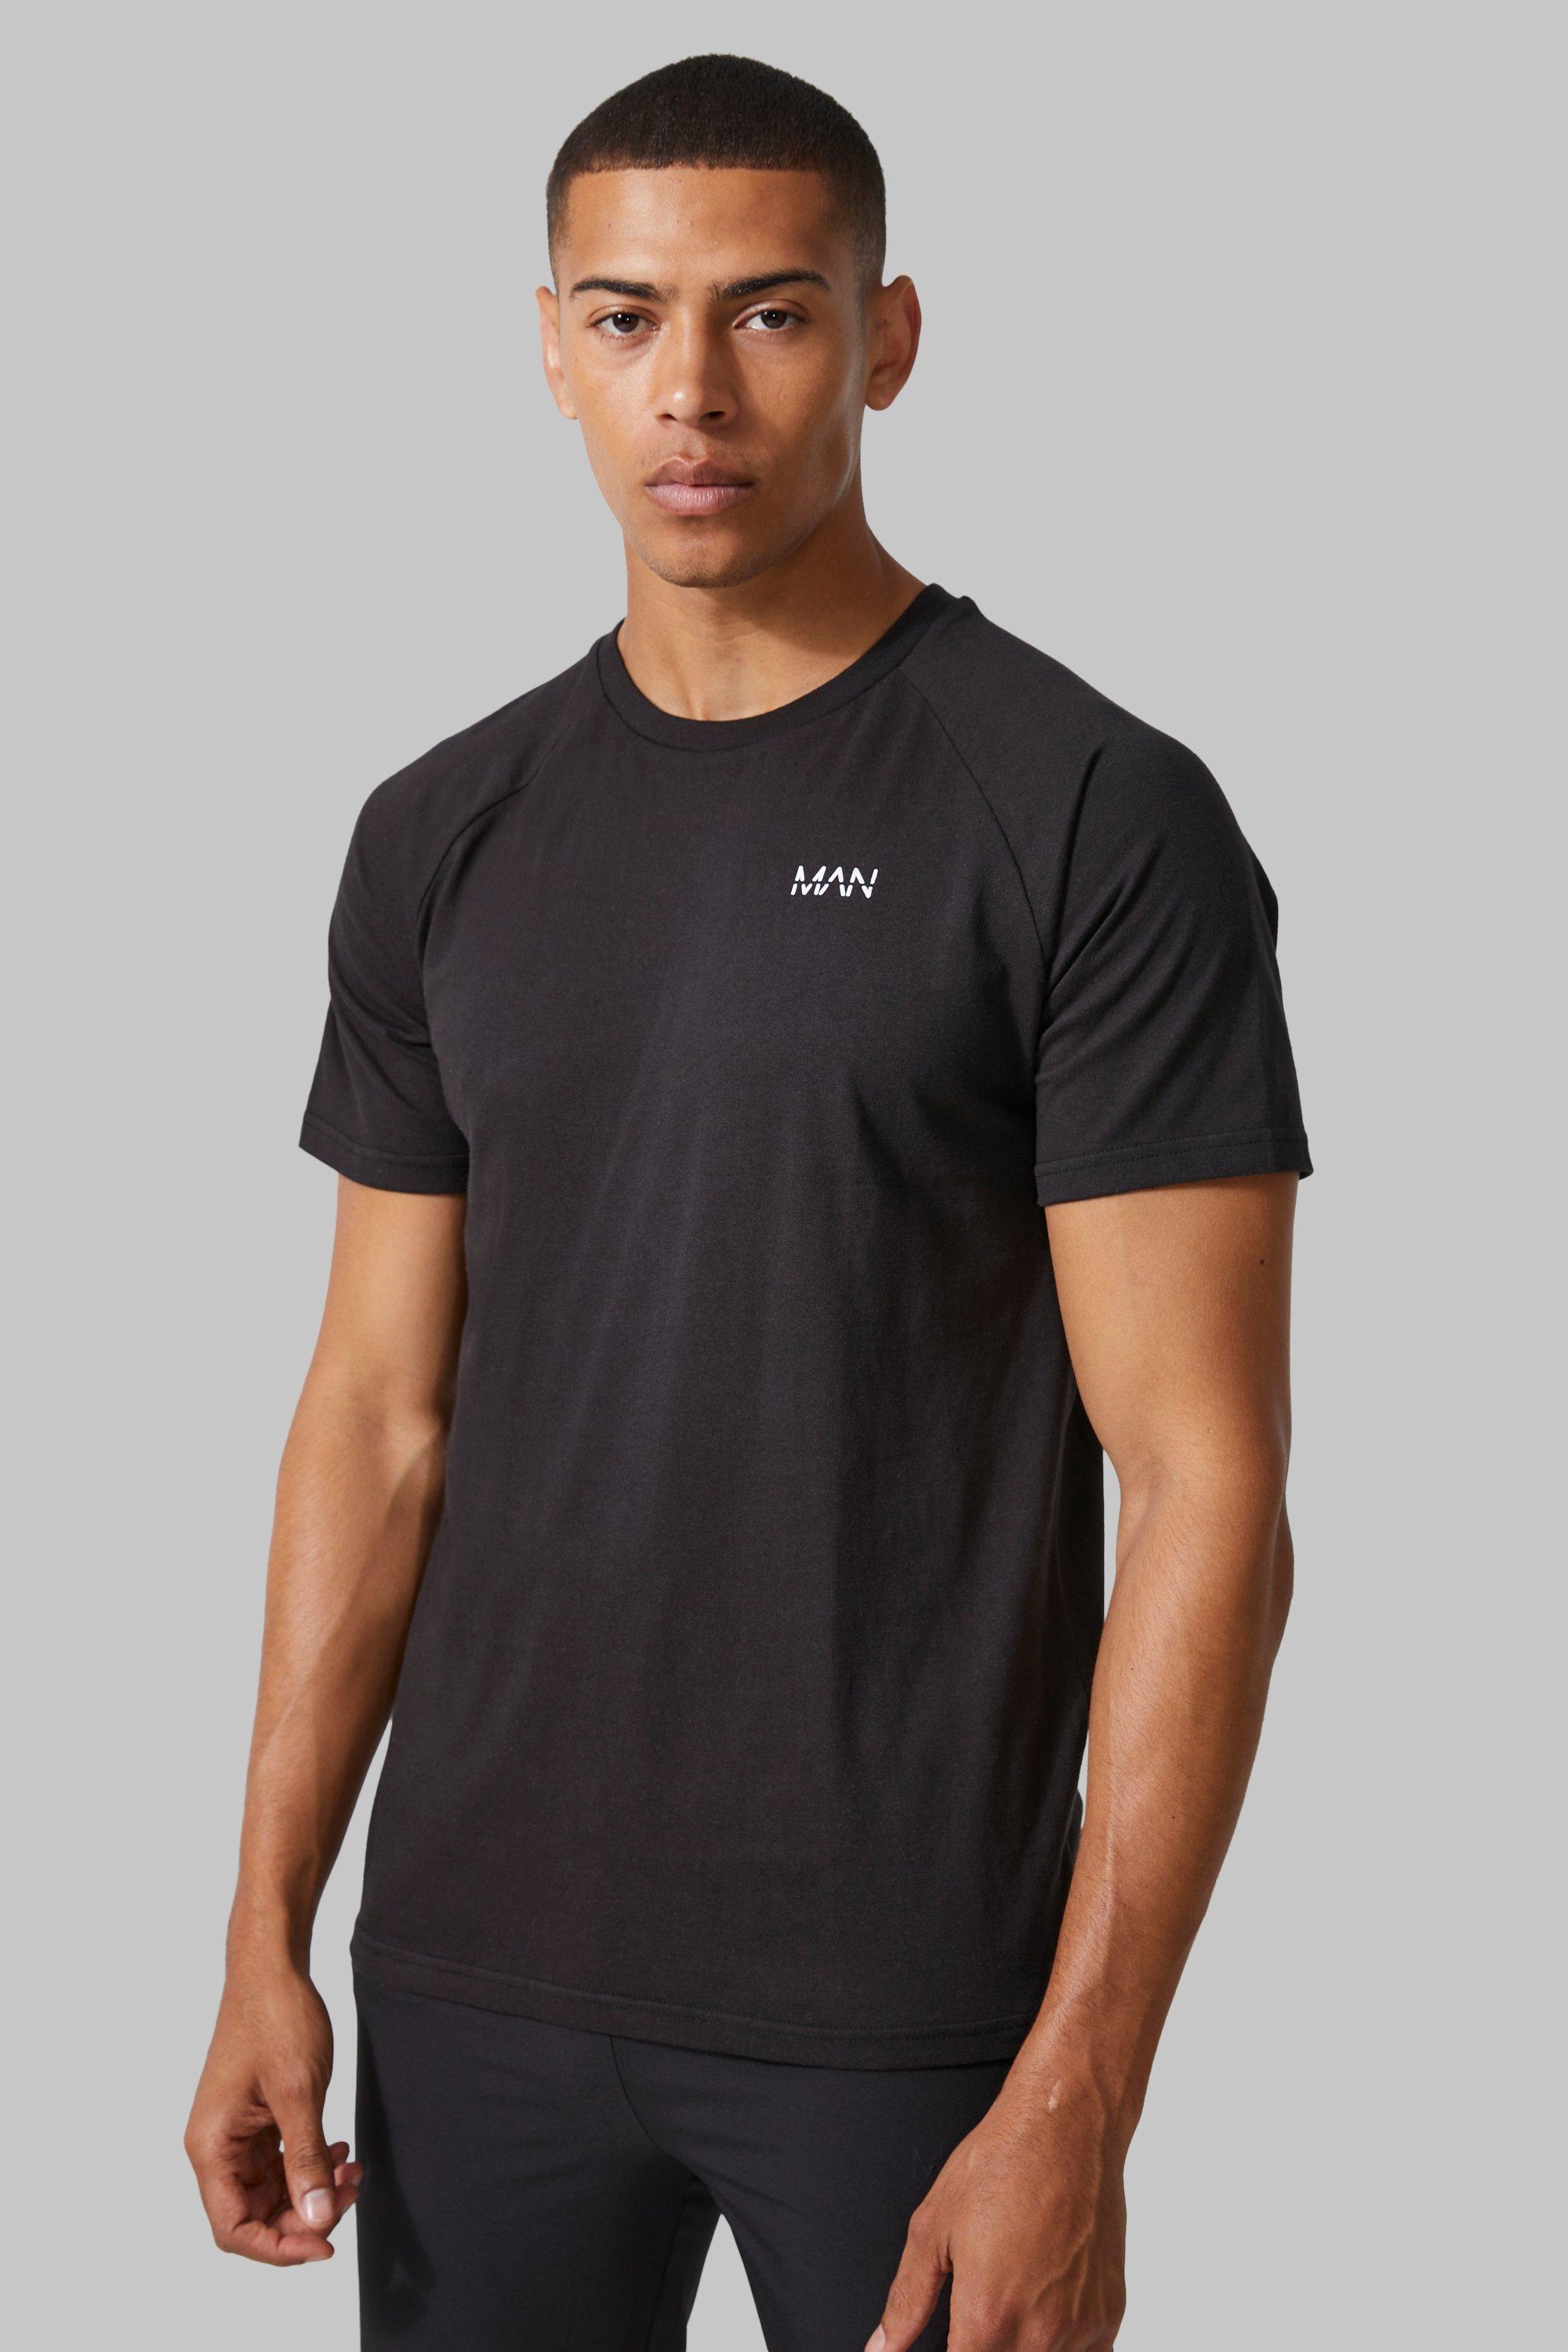 womens man active gym basic t-shirt - black - s, black